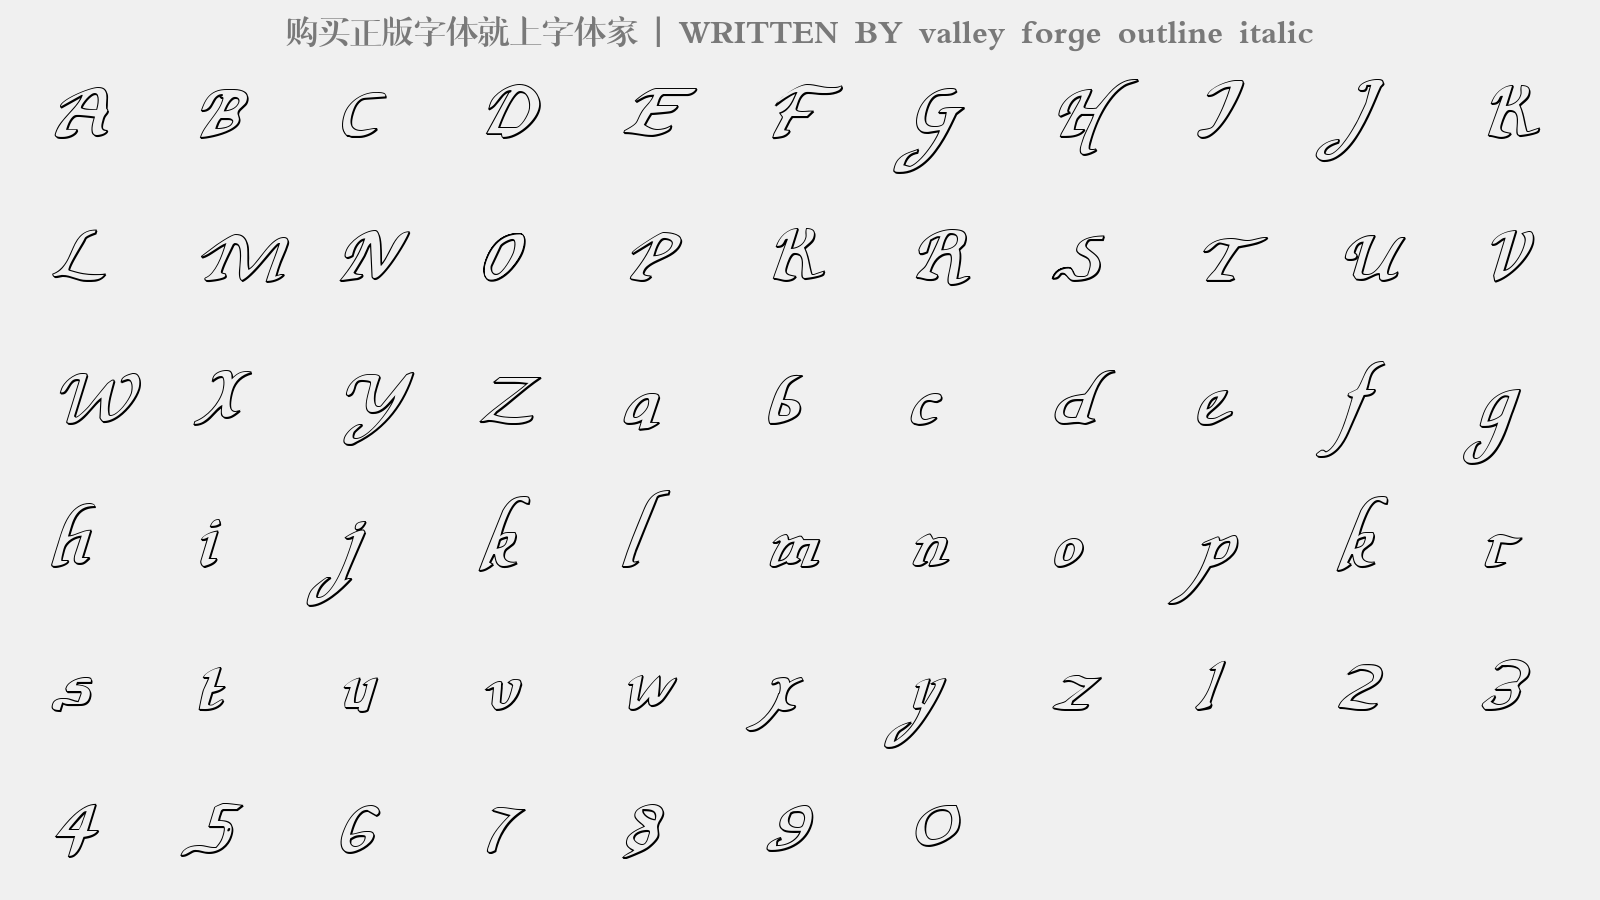 valley forge outline italic - 大写字母/小写字母/数字